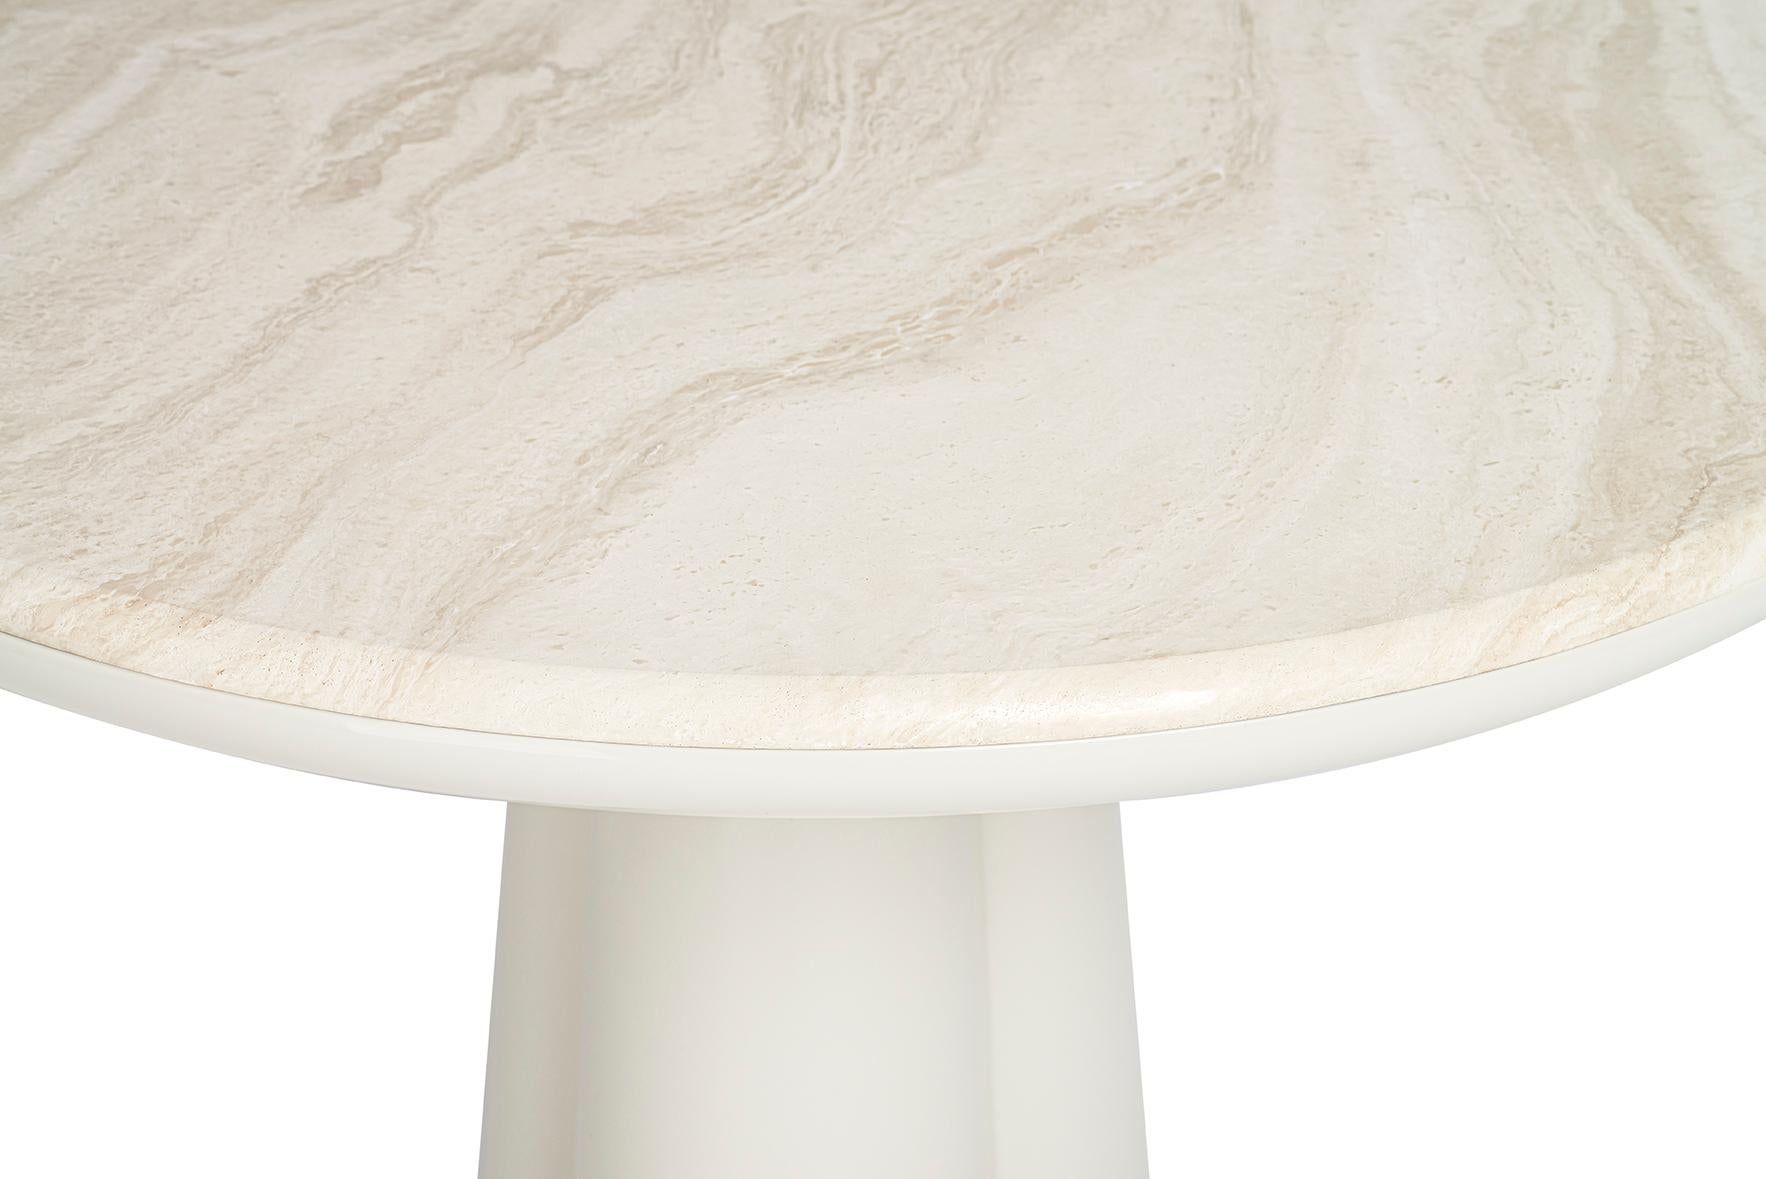 21st Cent. Elena Salmistraro Table Polyurethane Whitecarrara Marble Top Mat Base For Sale 2